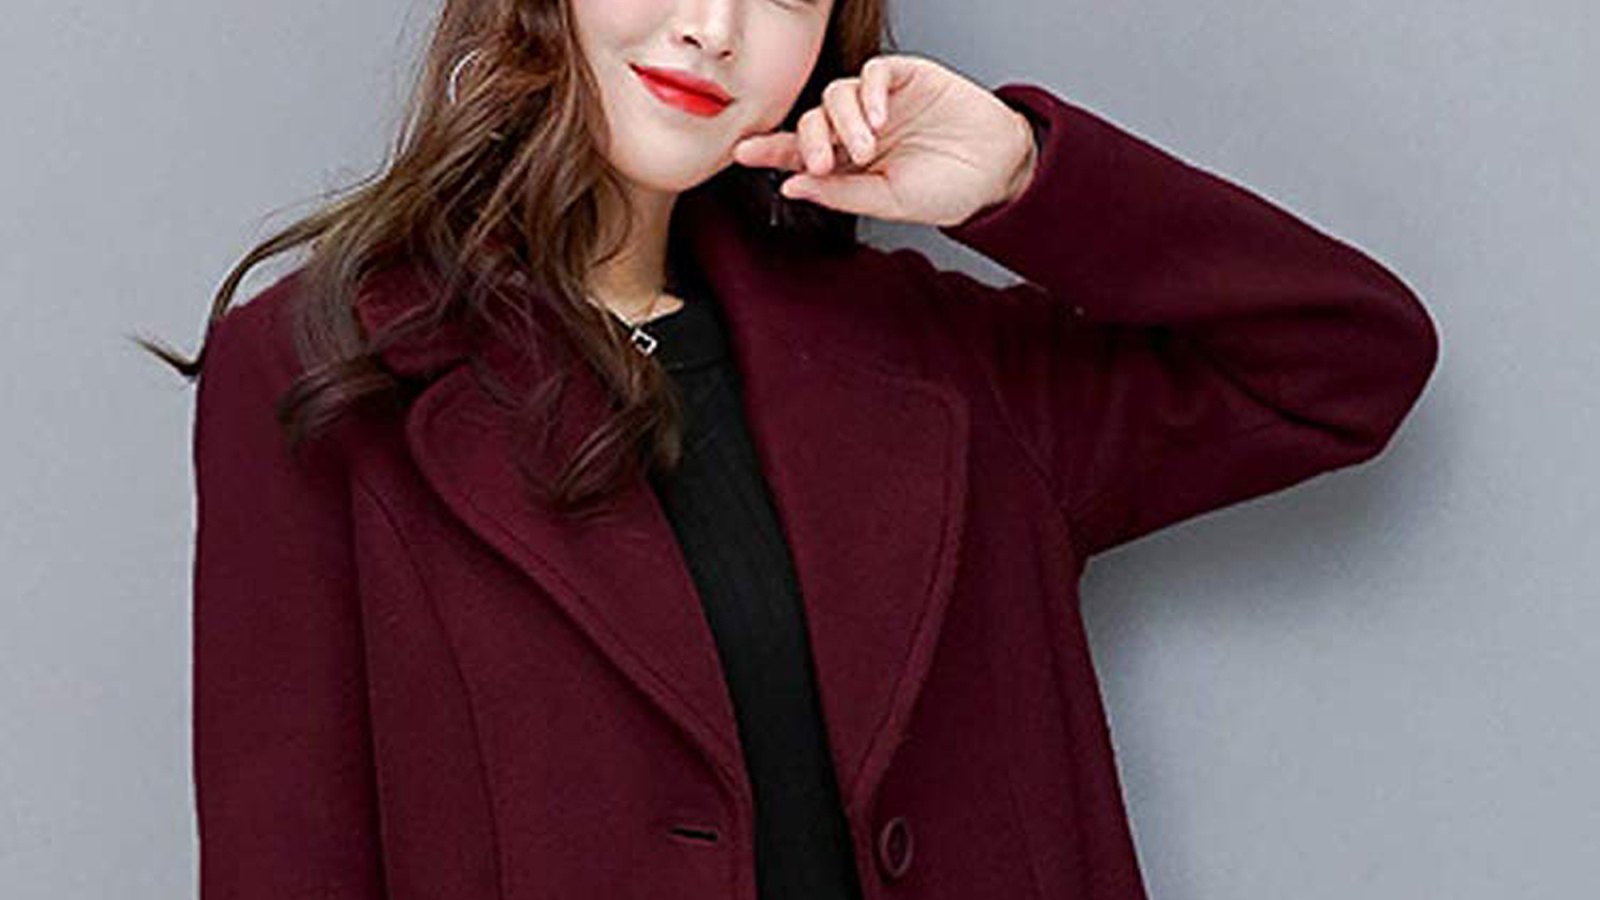 chouyatou Women's Big Notch Lapel Single-Breasted Mid-Long Wool-Blend Coat